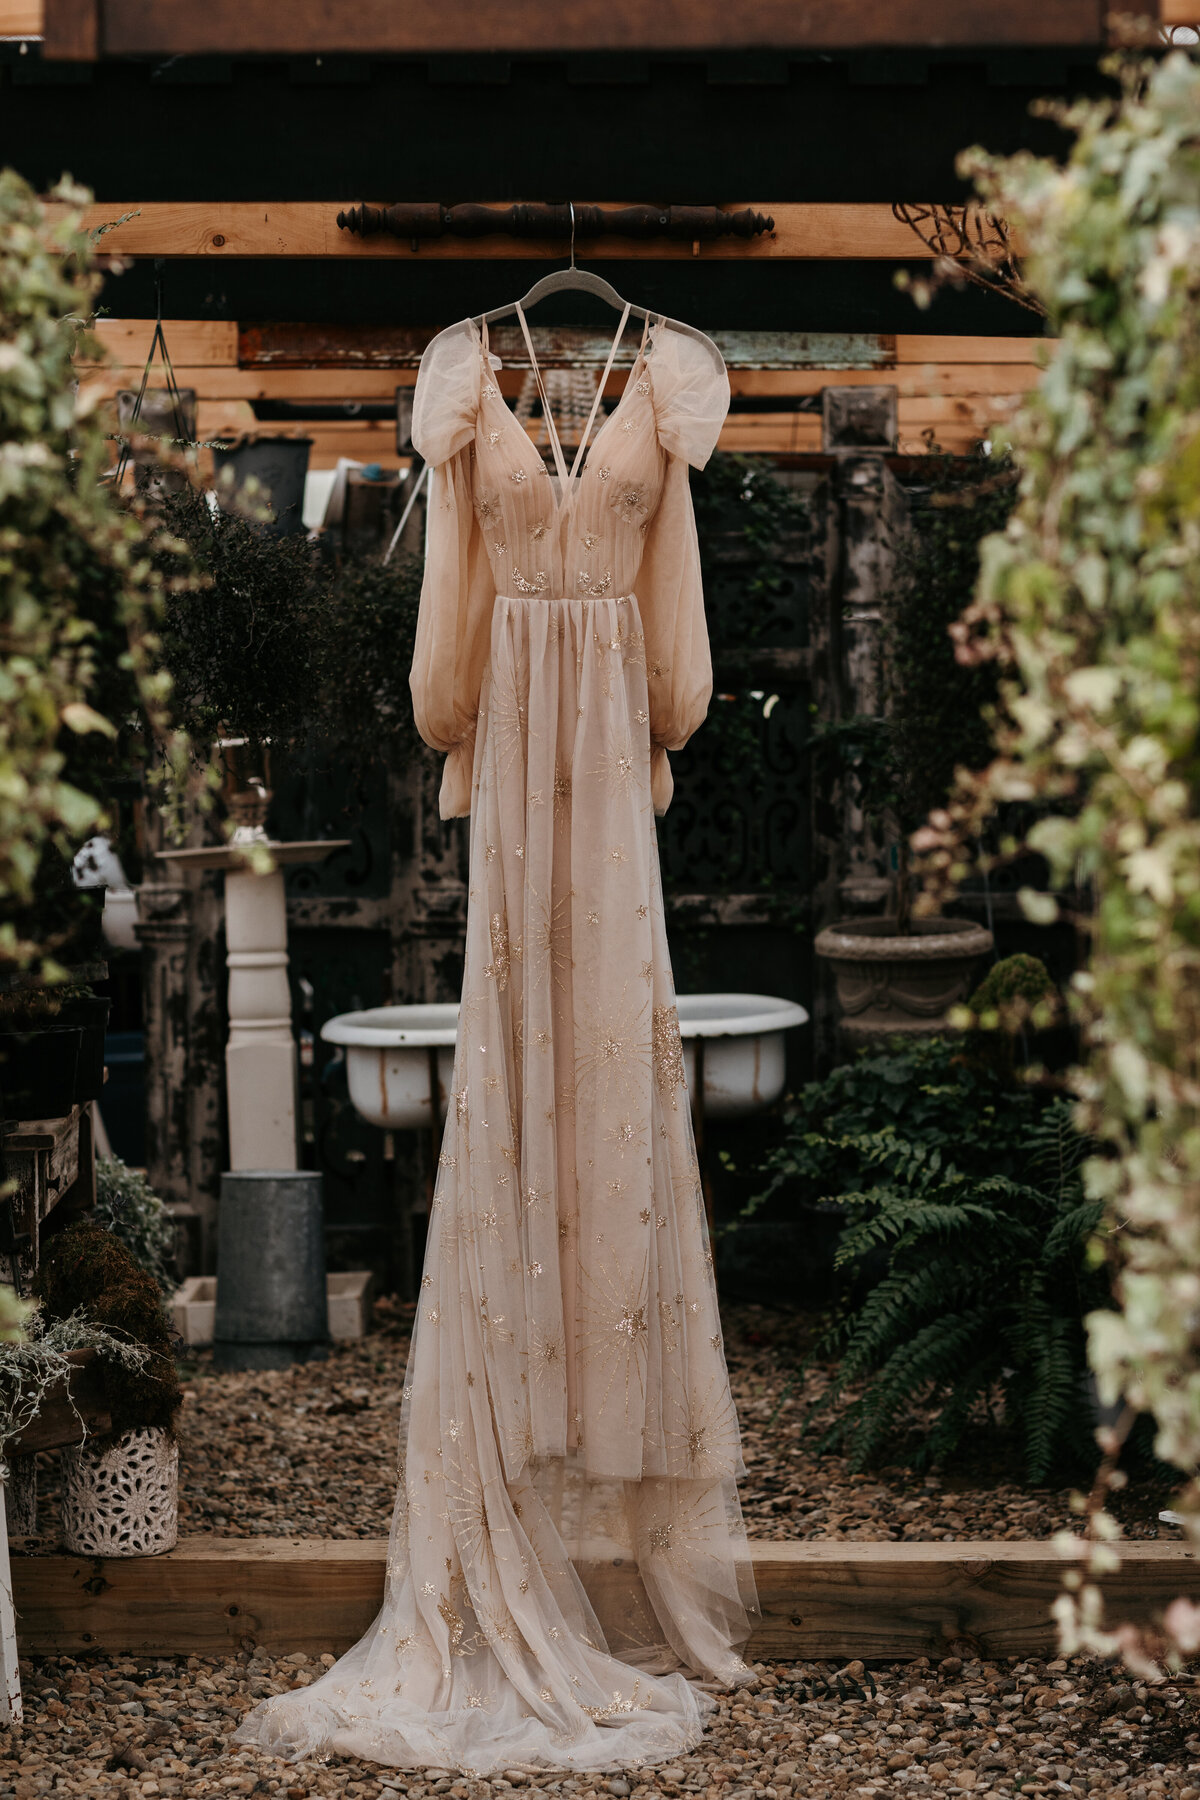 Hung wedding dress